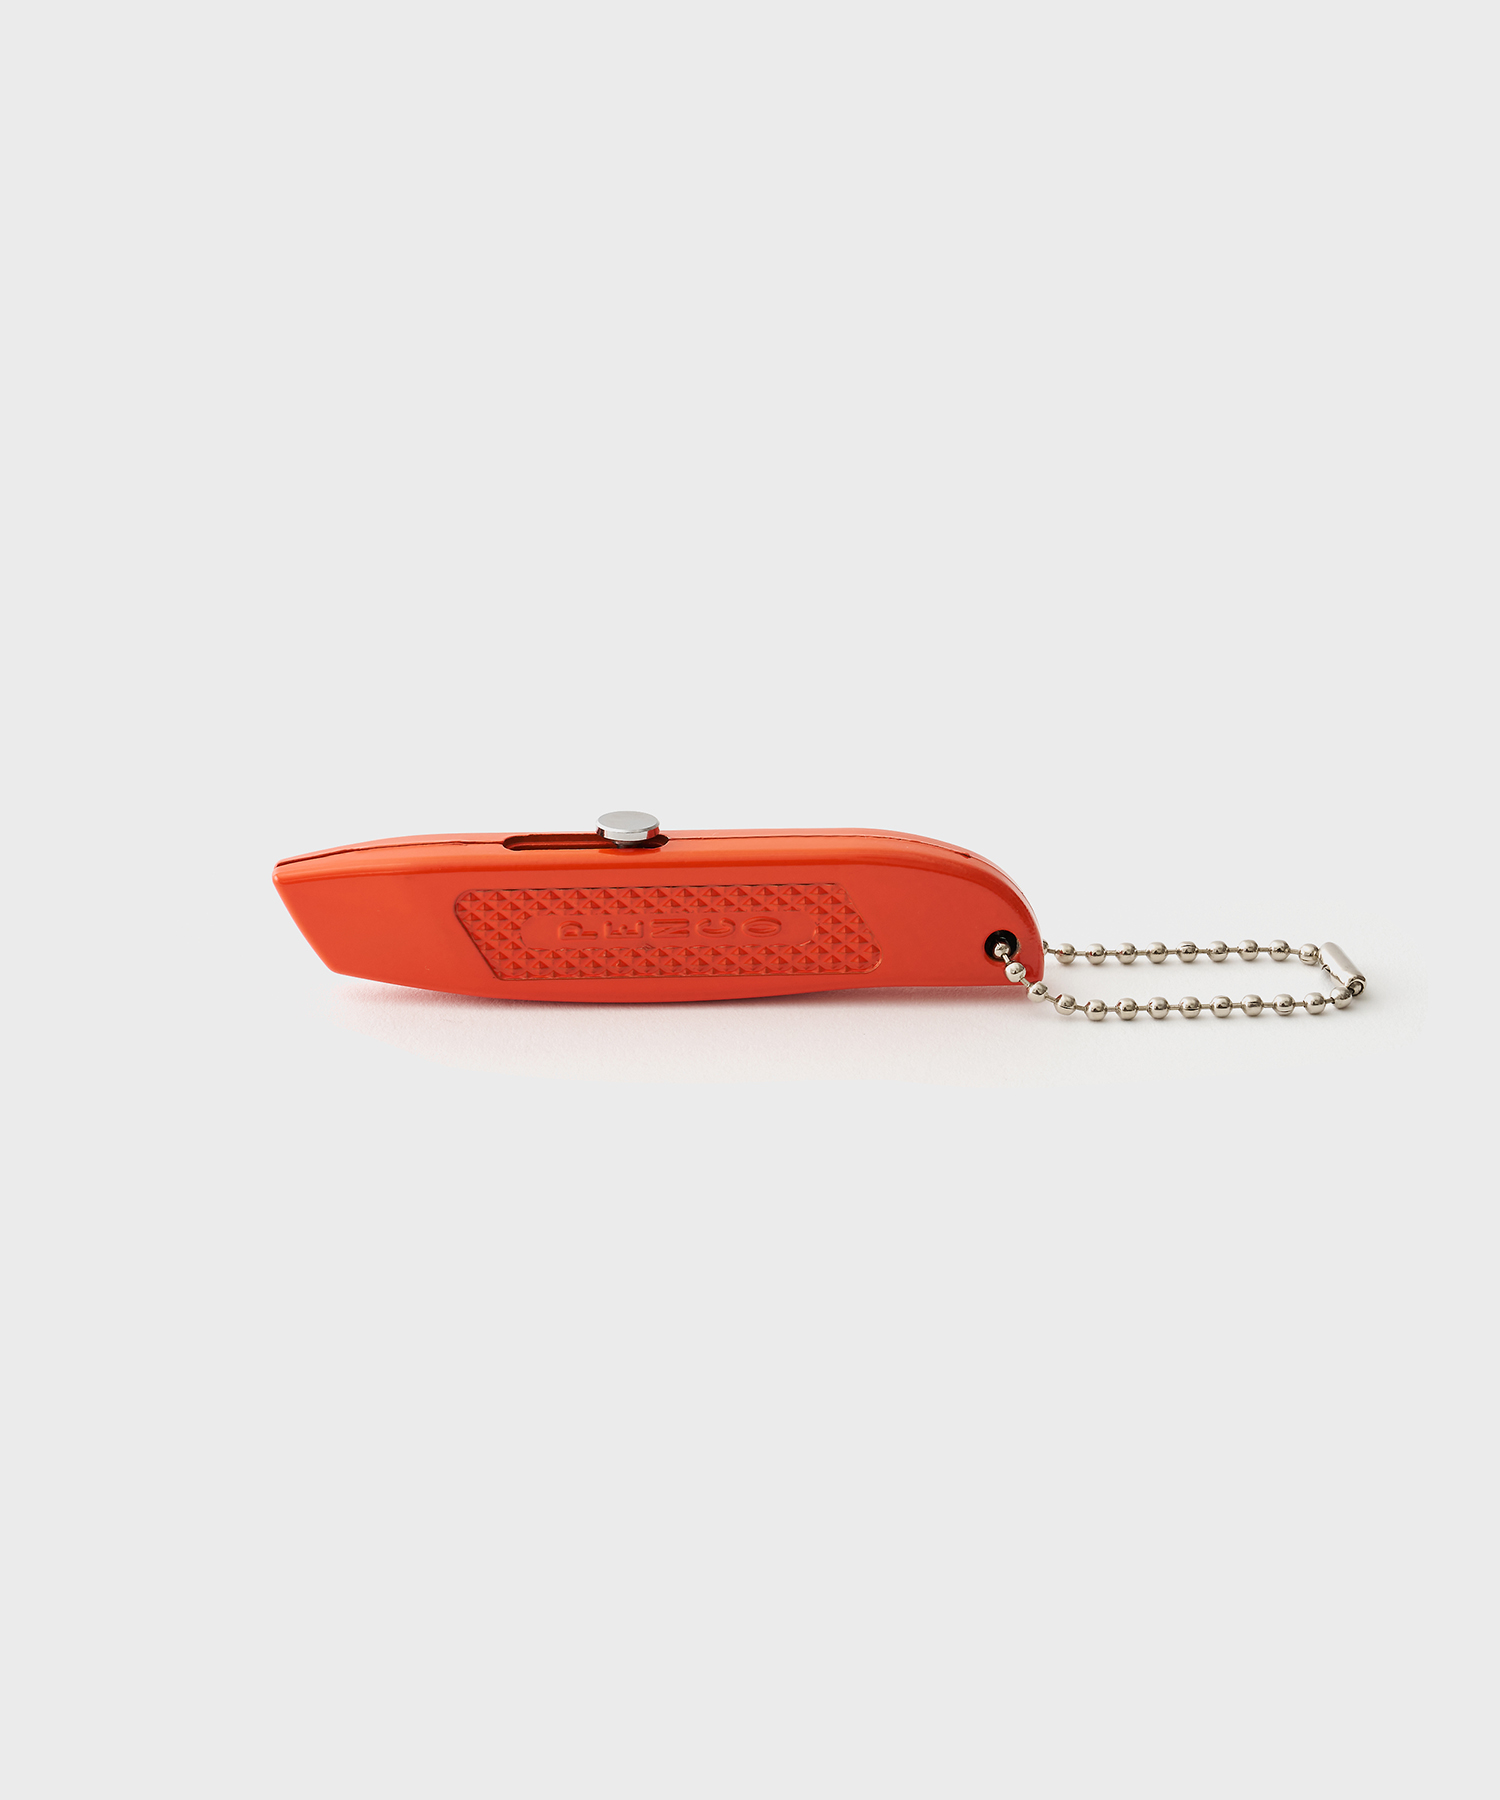 Penco Utility Knife (Orange)